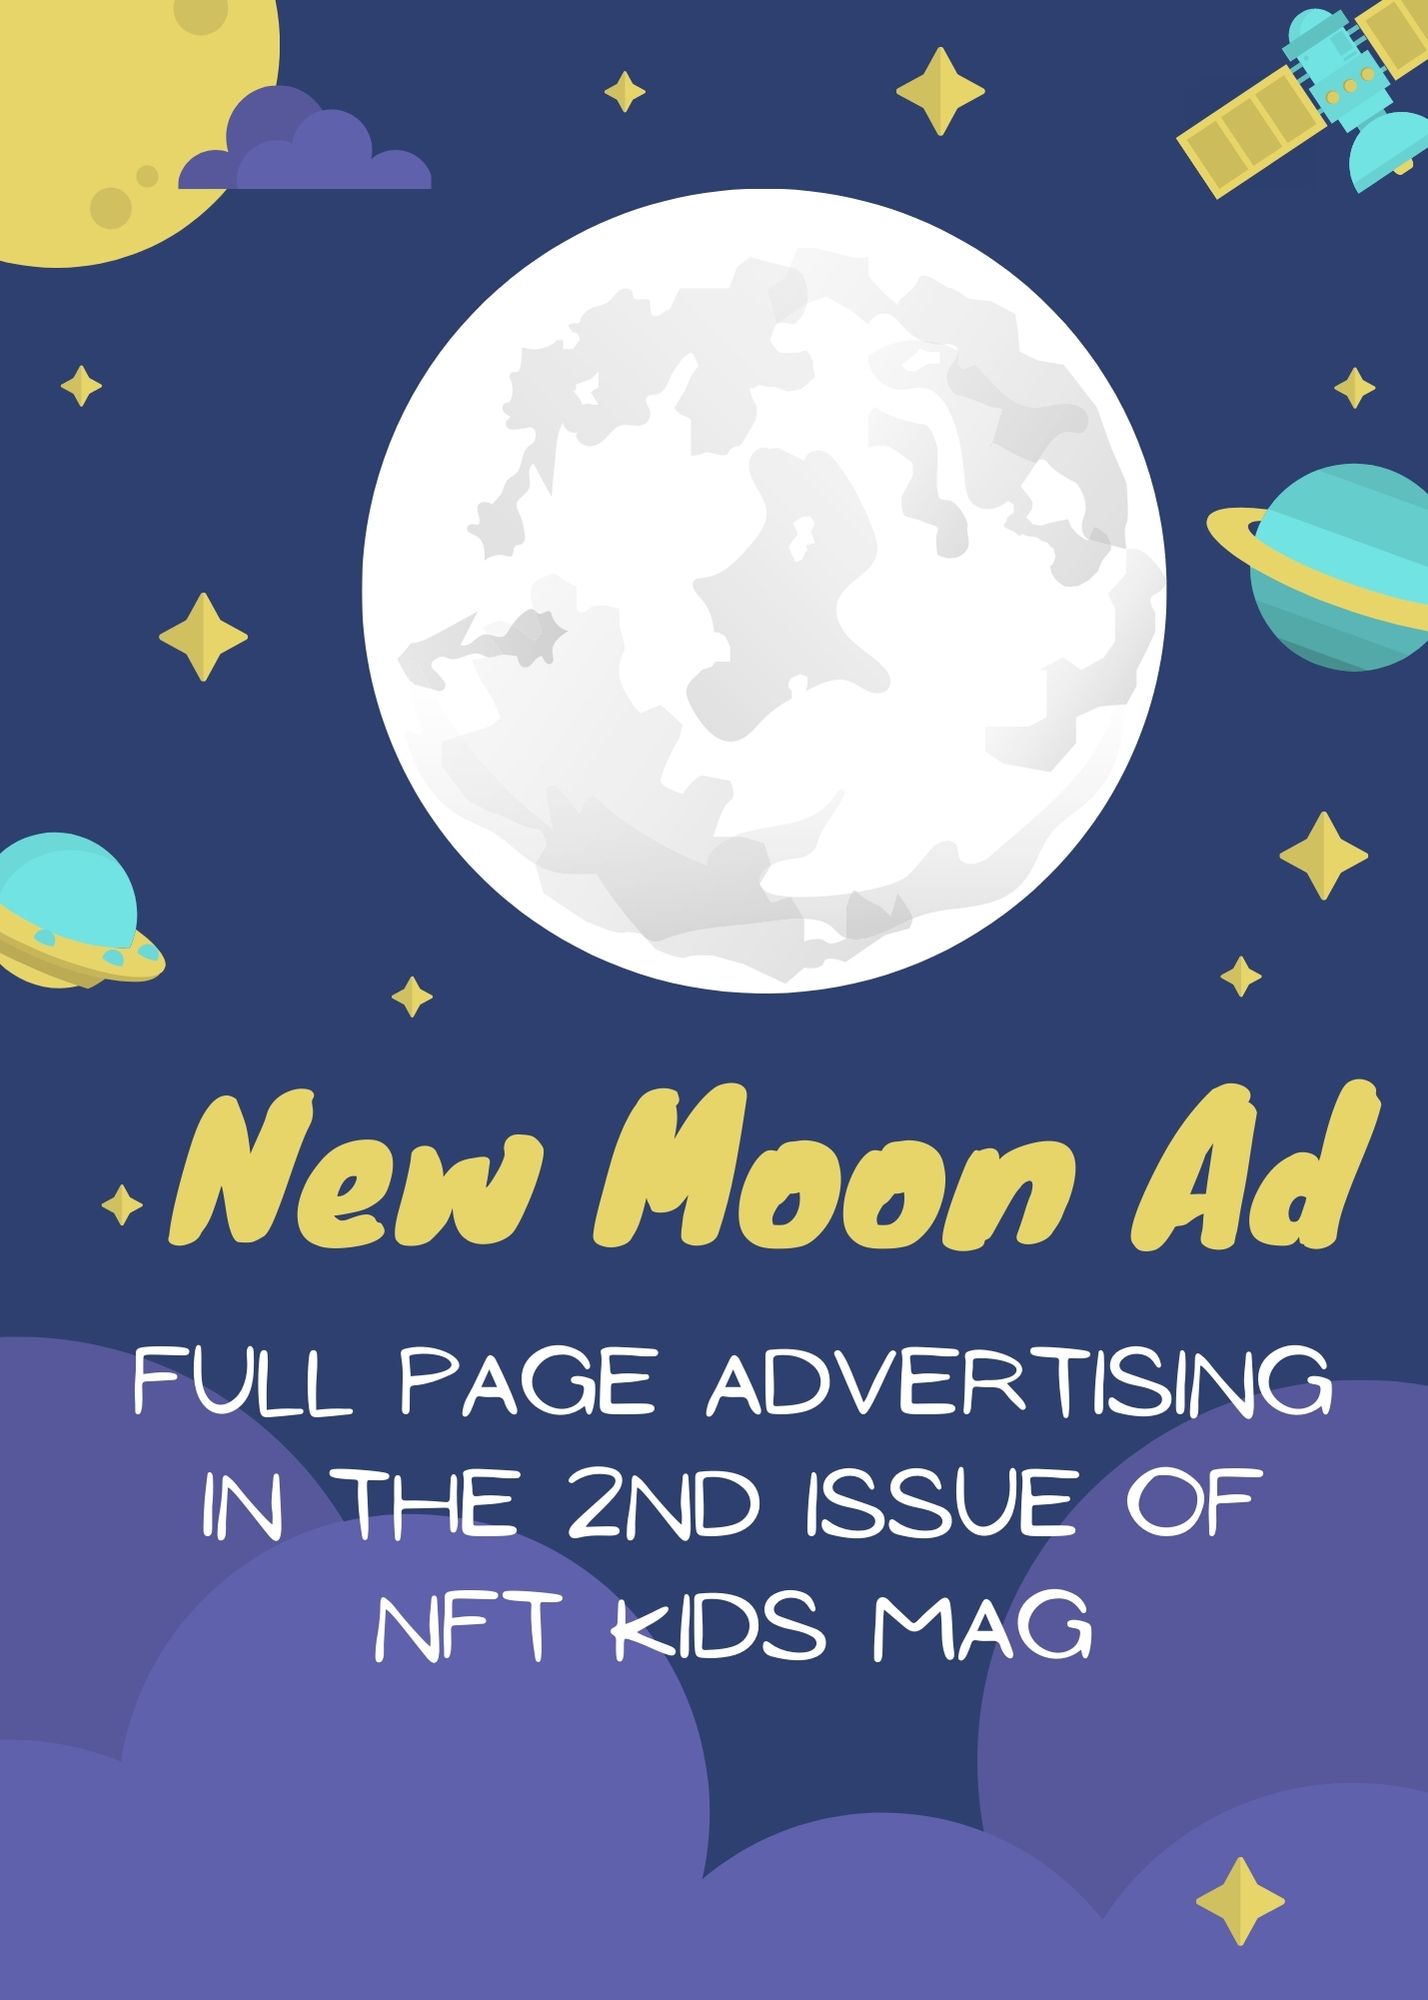 NFT Kids Mag Ad space